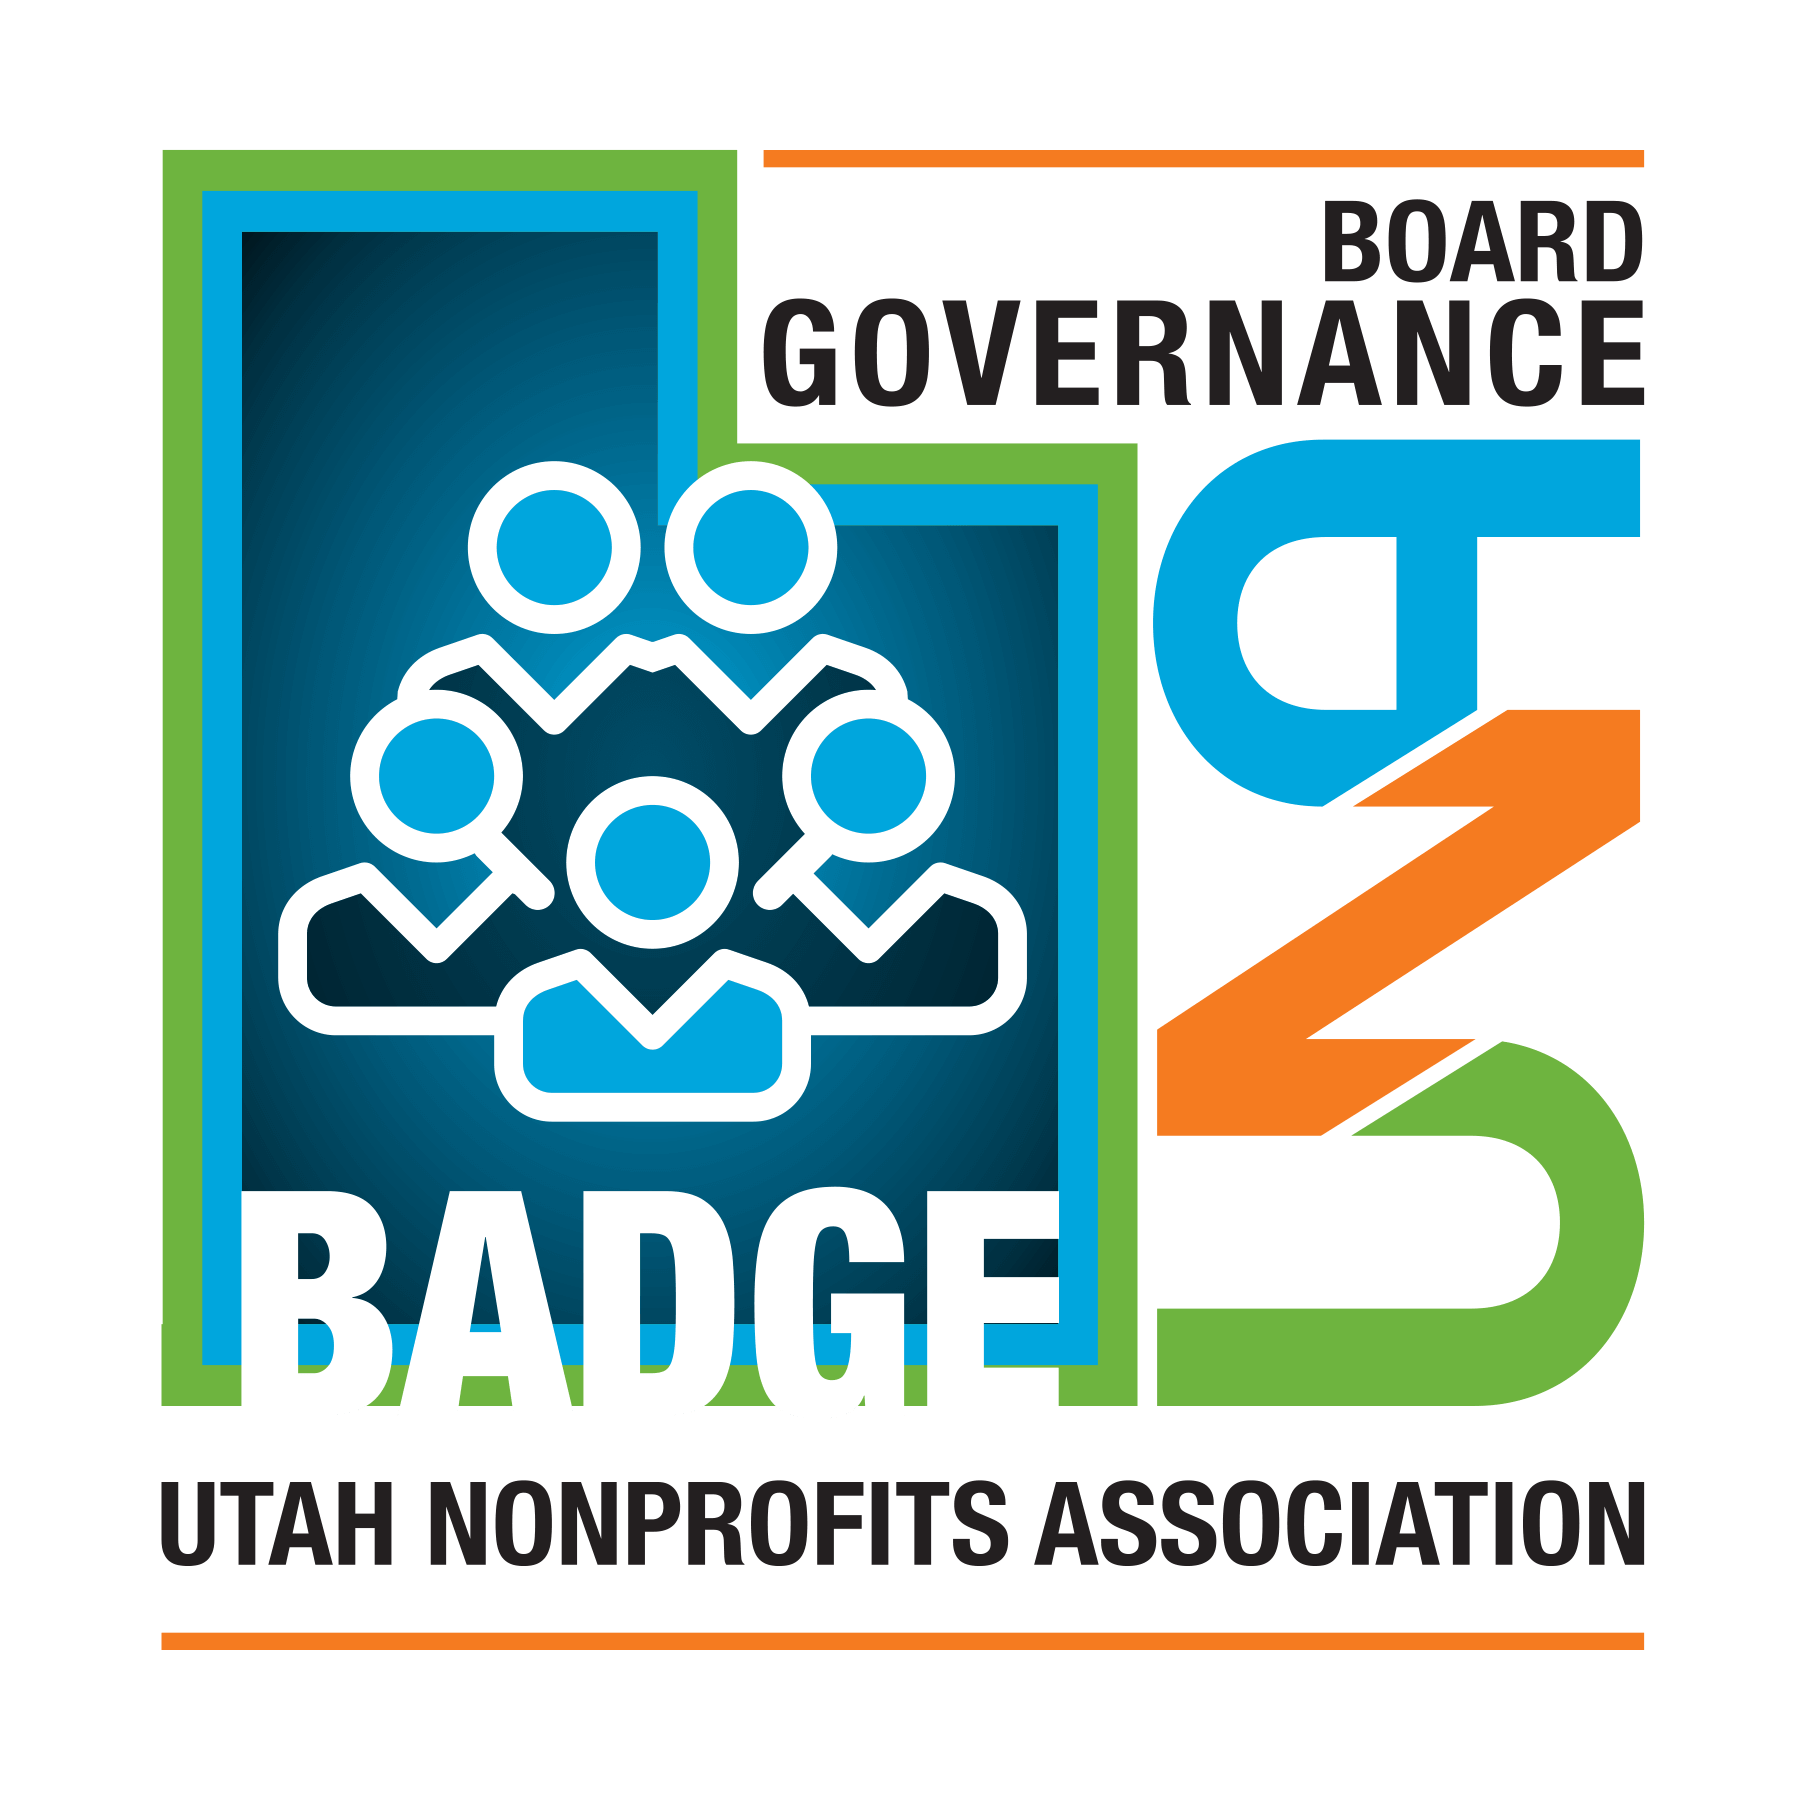 UNA Nonprofit Credential Badge for Board Governance